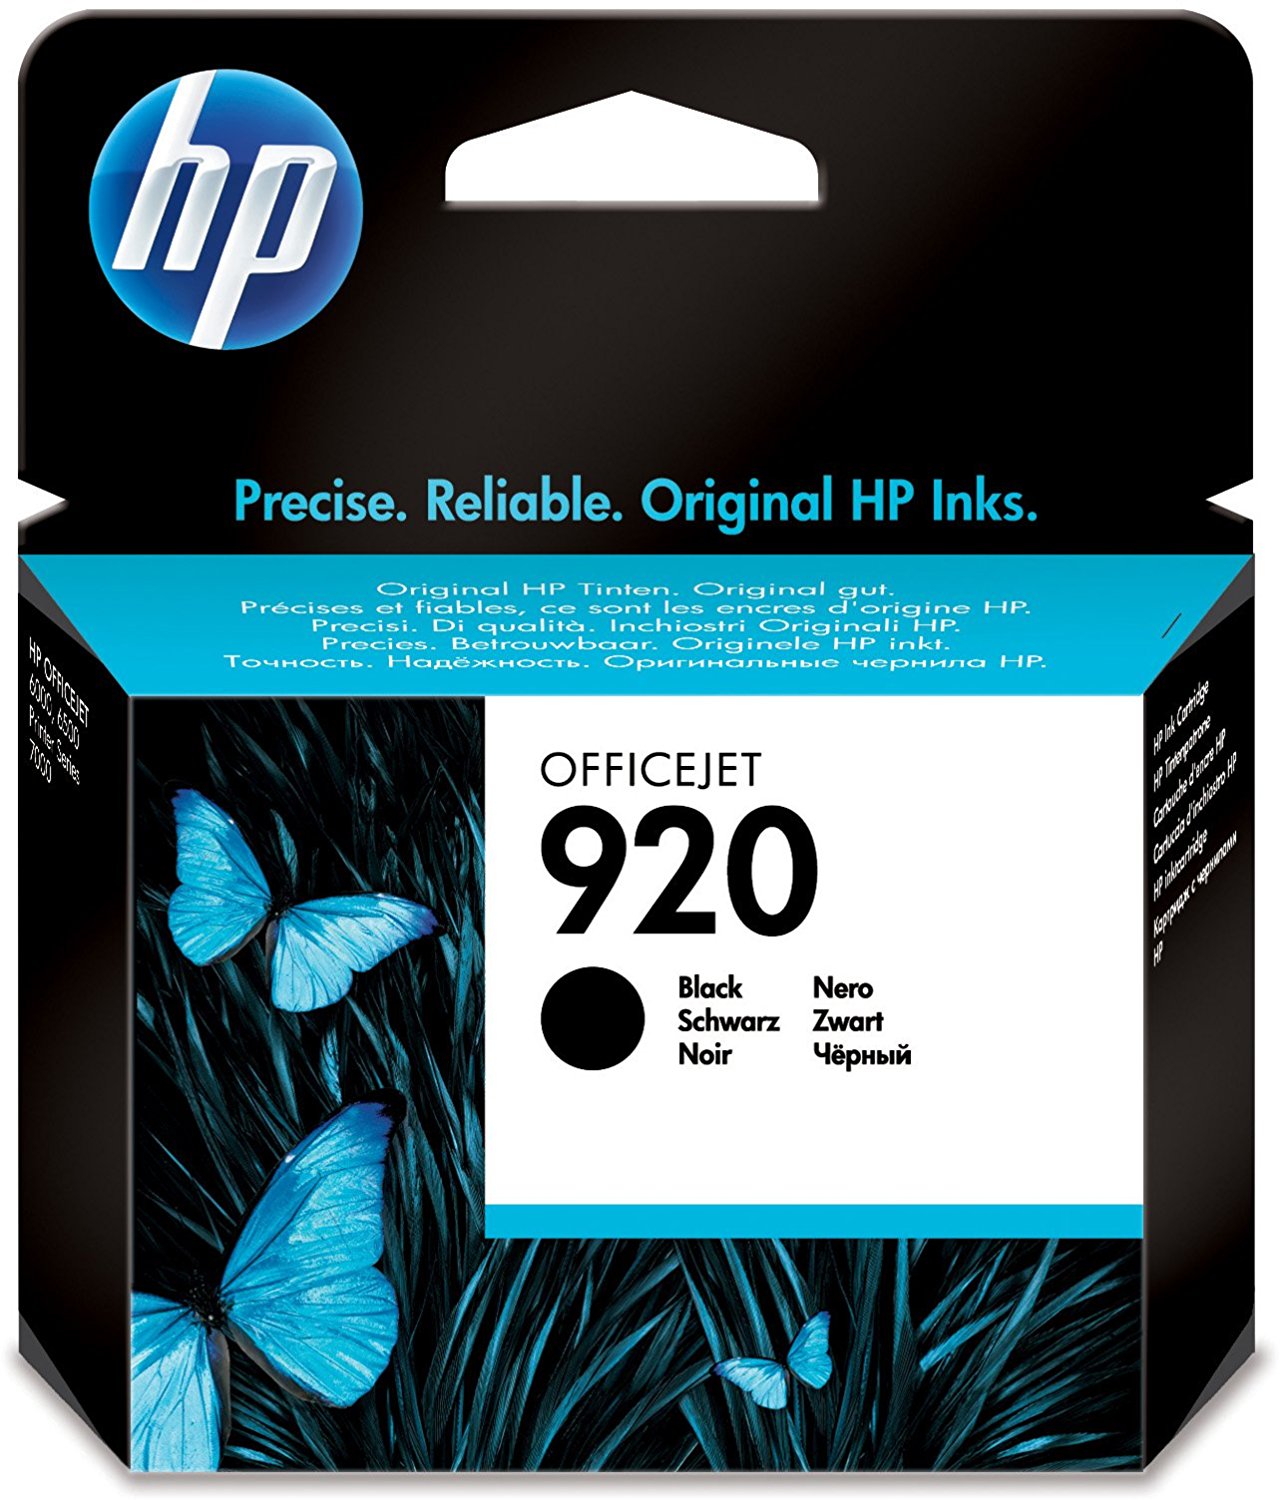 CD971AE - HP 920 - Black Officejet Ink Cartridge (CD971AE) - NEW